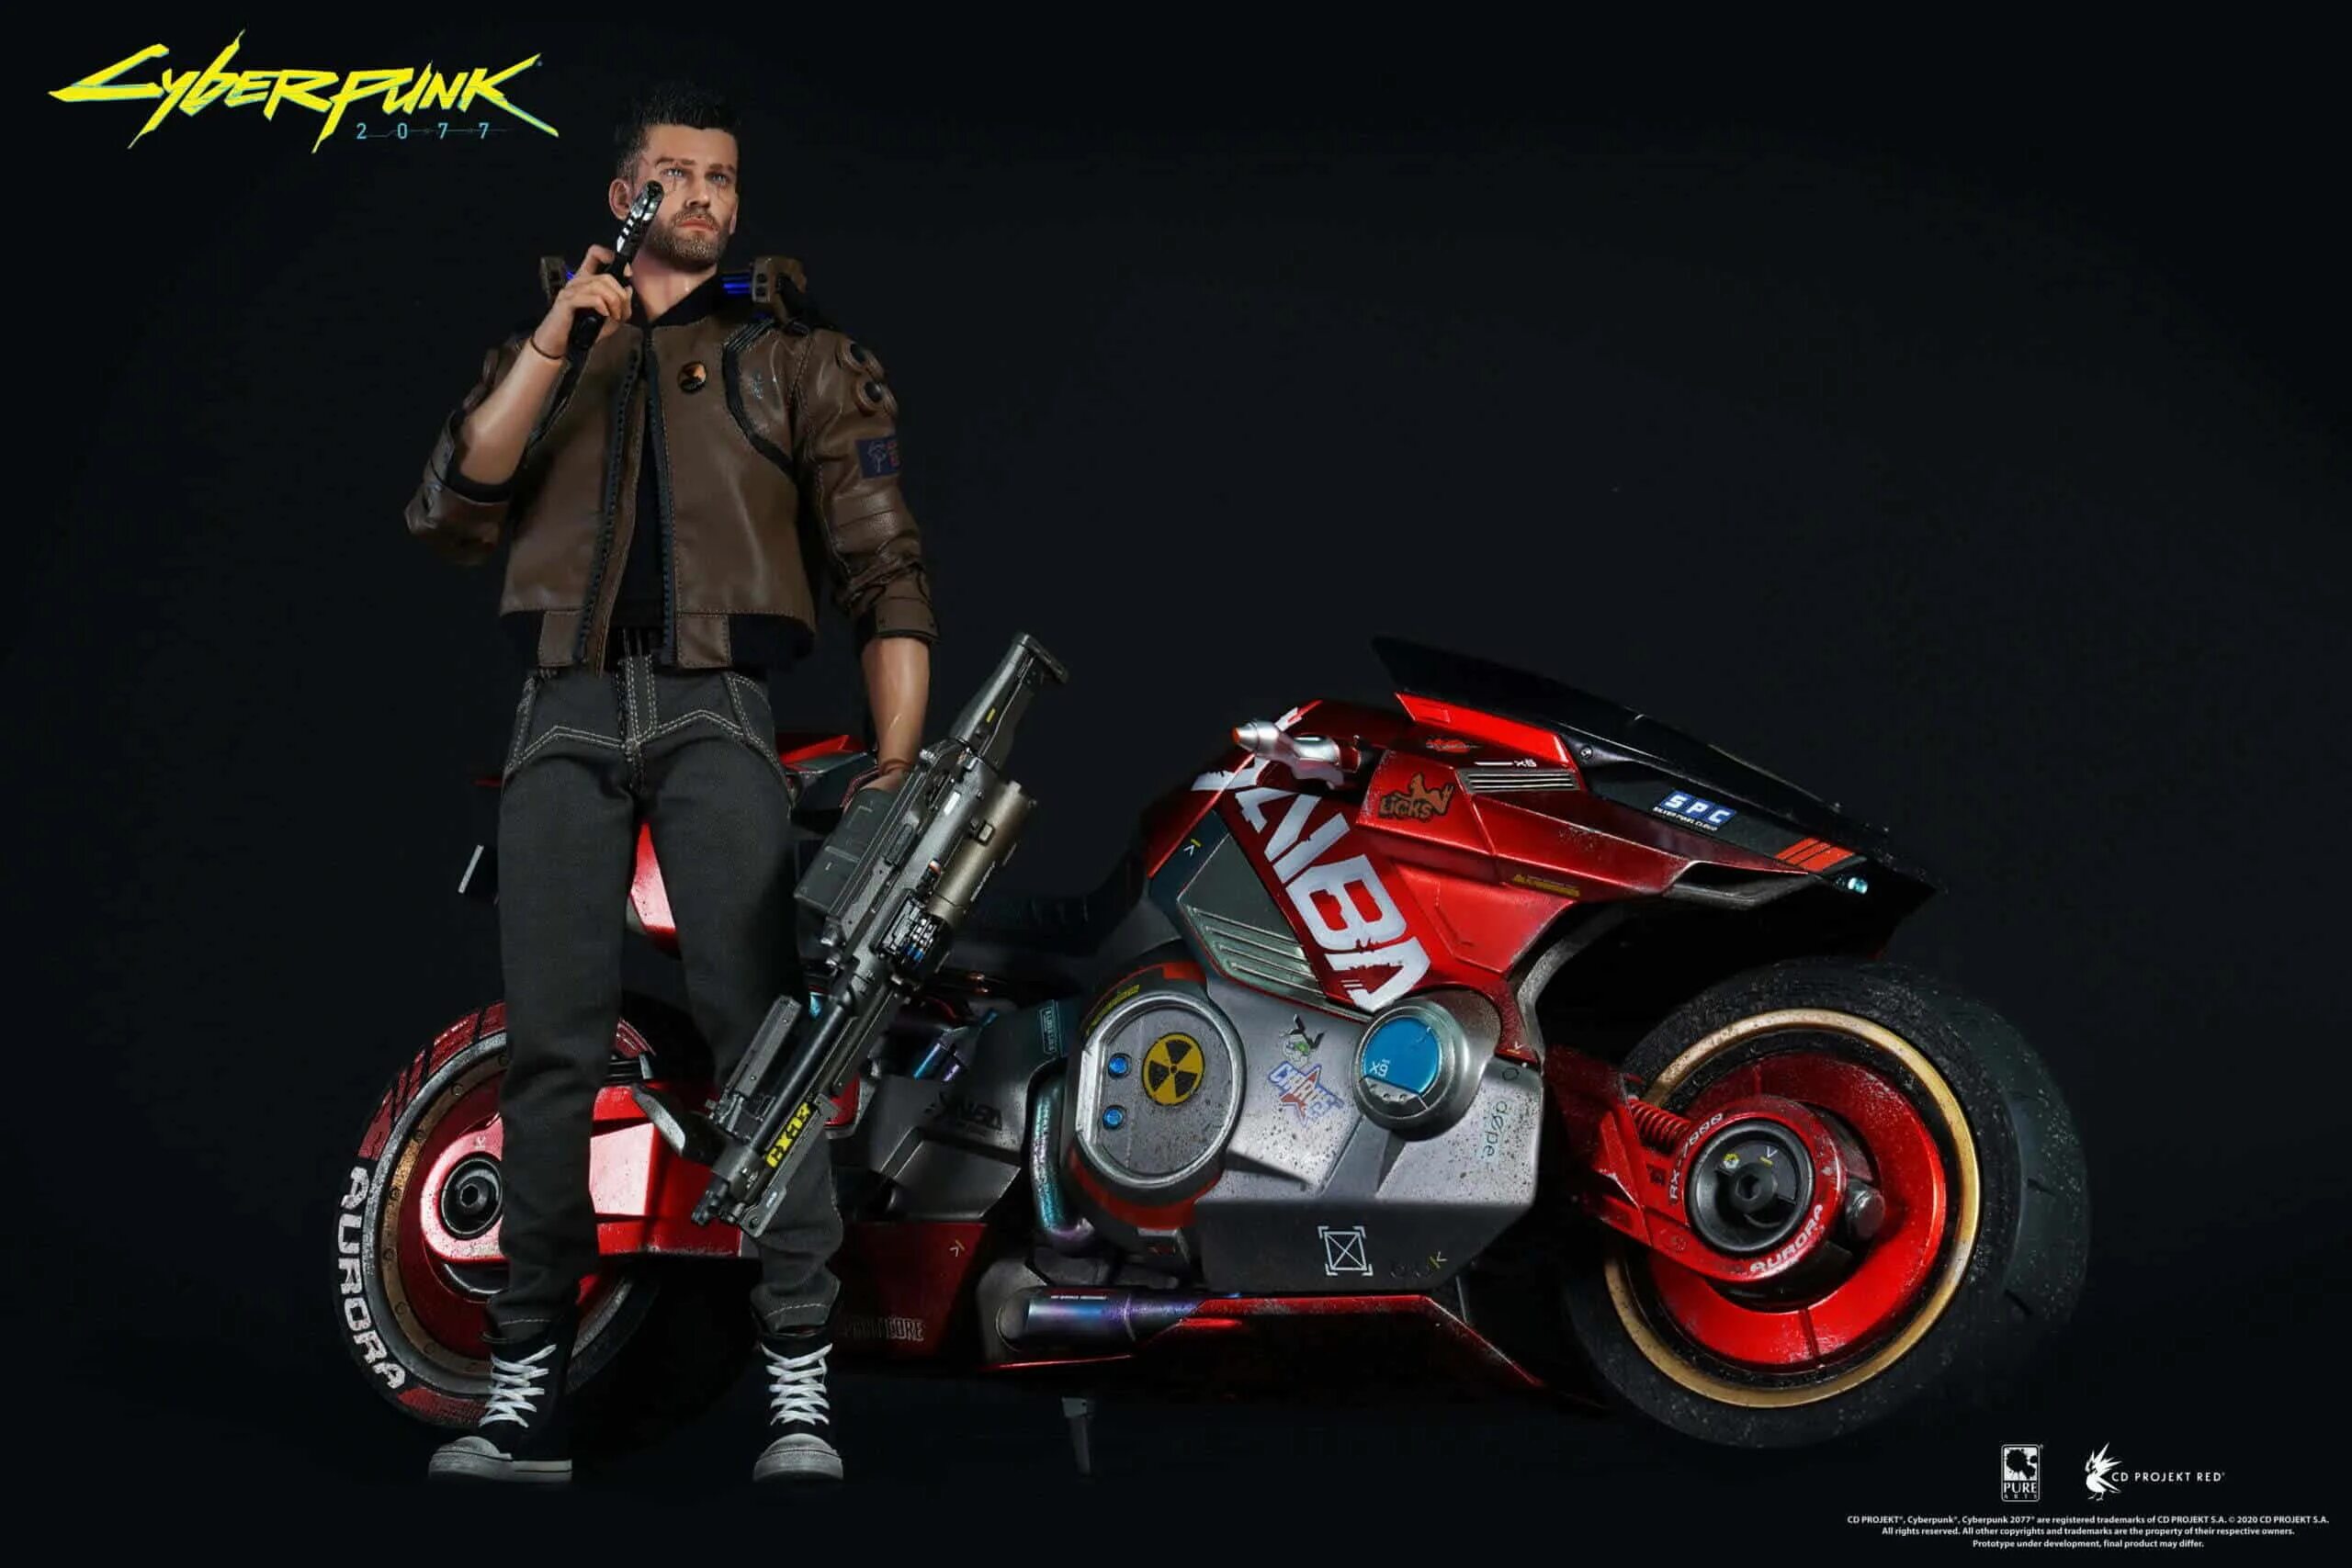 Фигурка Cyberpunk 2077: v male + Sportbike Yaiba Kusanagi ct3-h. Cyberpunk 2077 мотоцикл Кусанаги. Байк Джеки Cyberpunk 2077. Фигурка v male — Pure Arts Cyberpunk 2077.